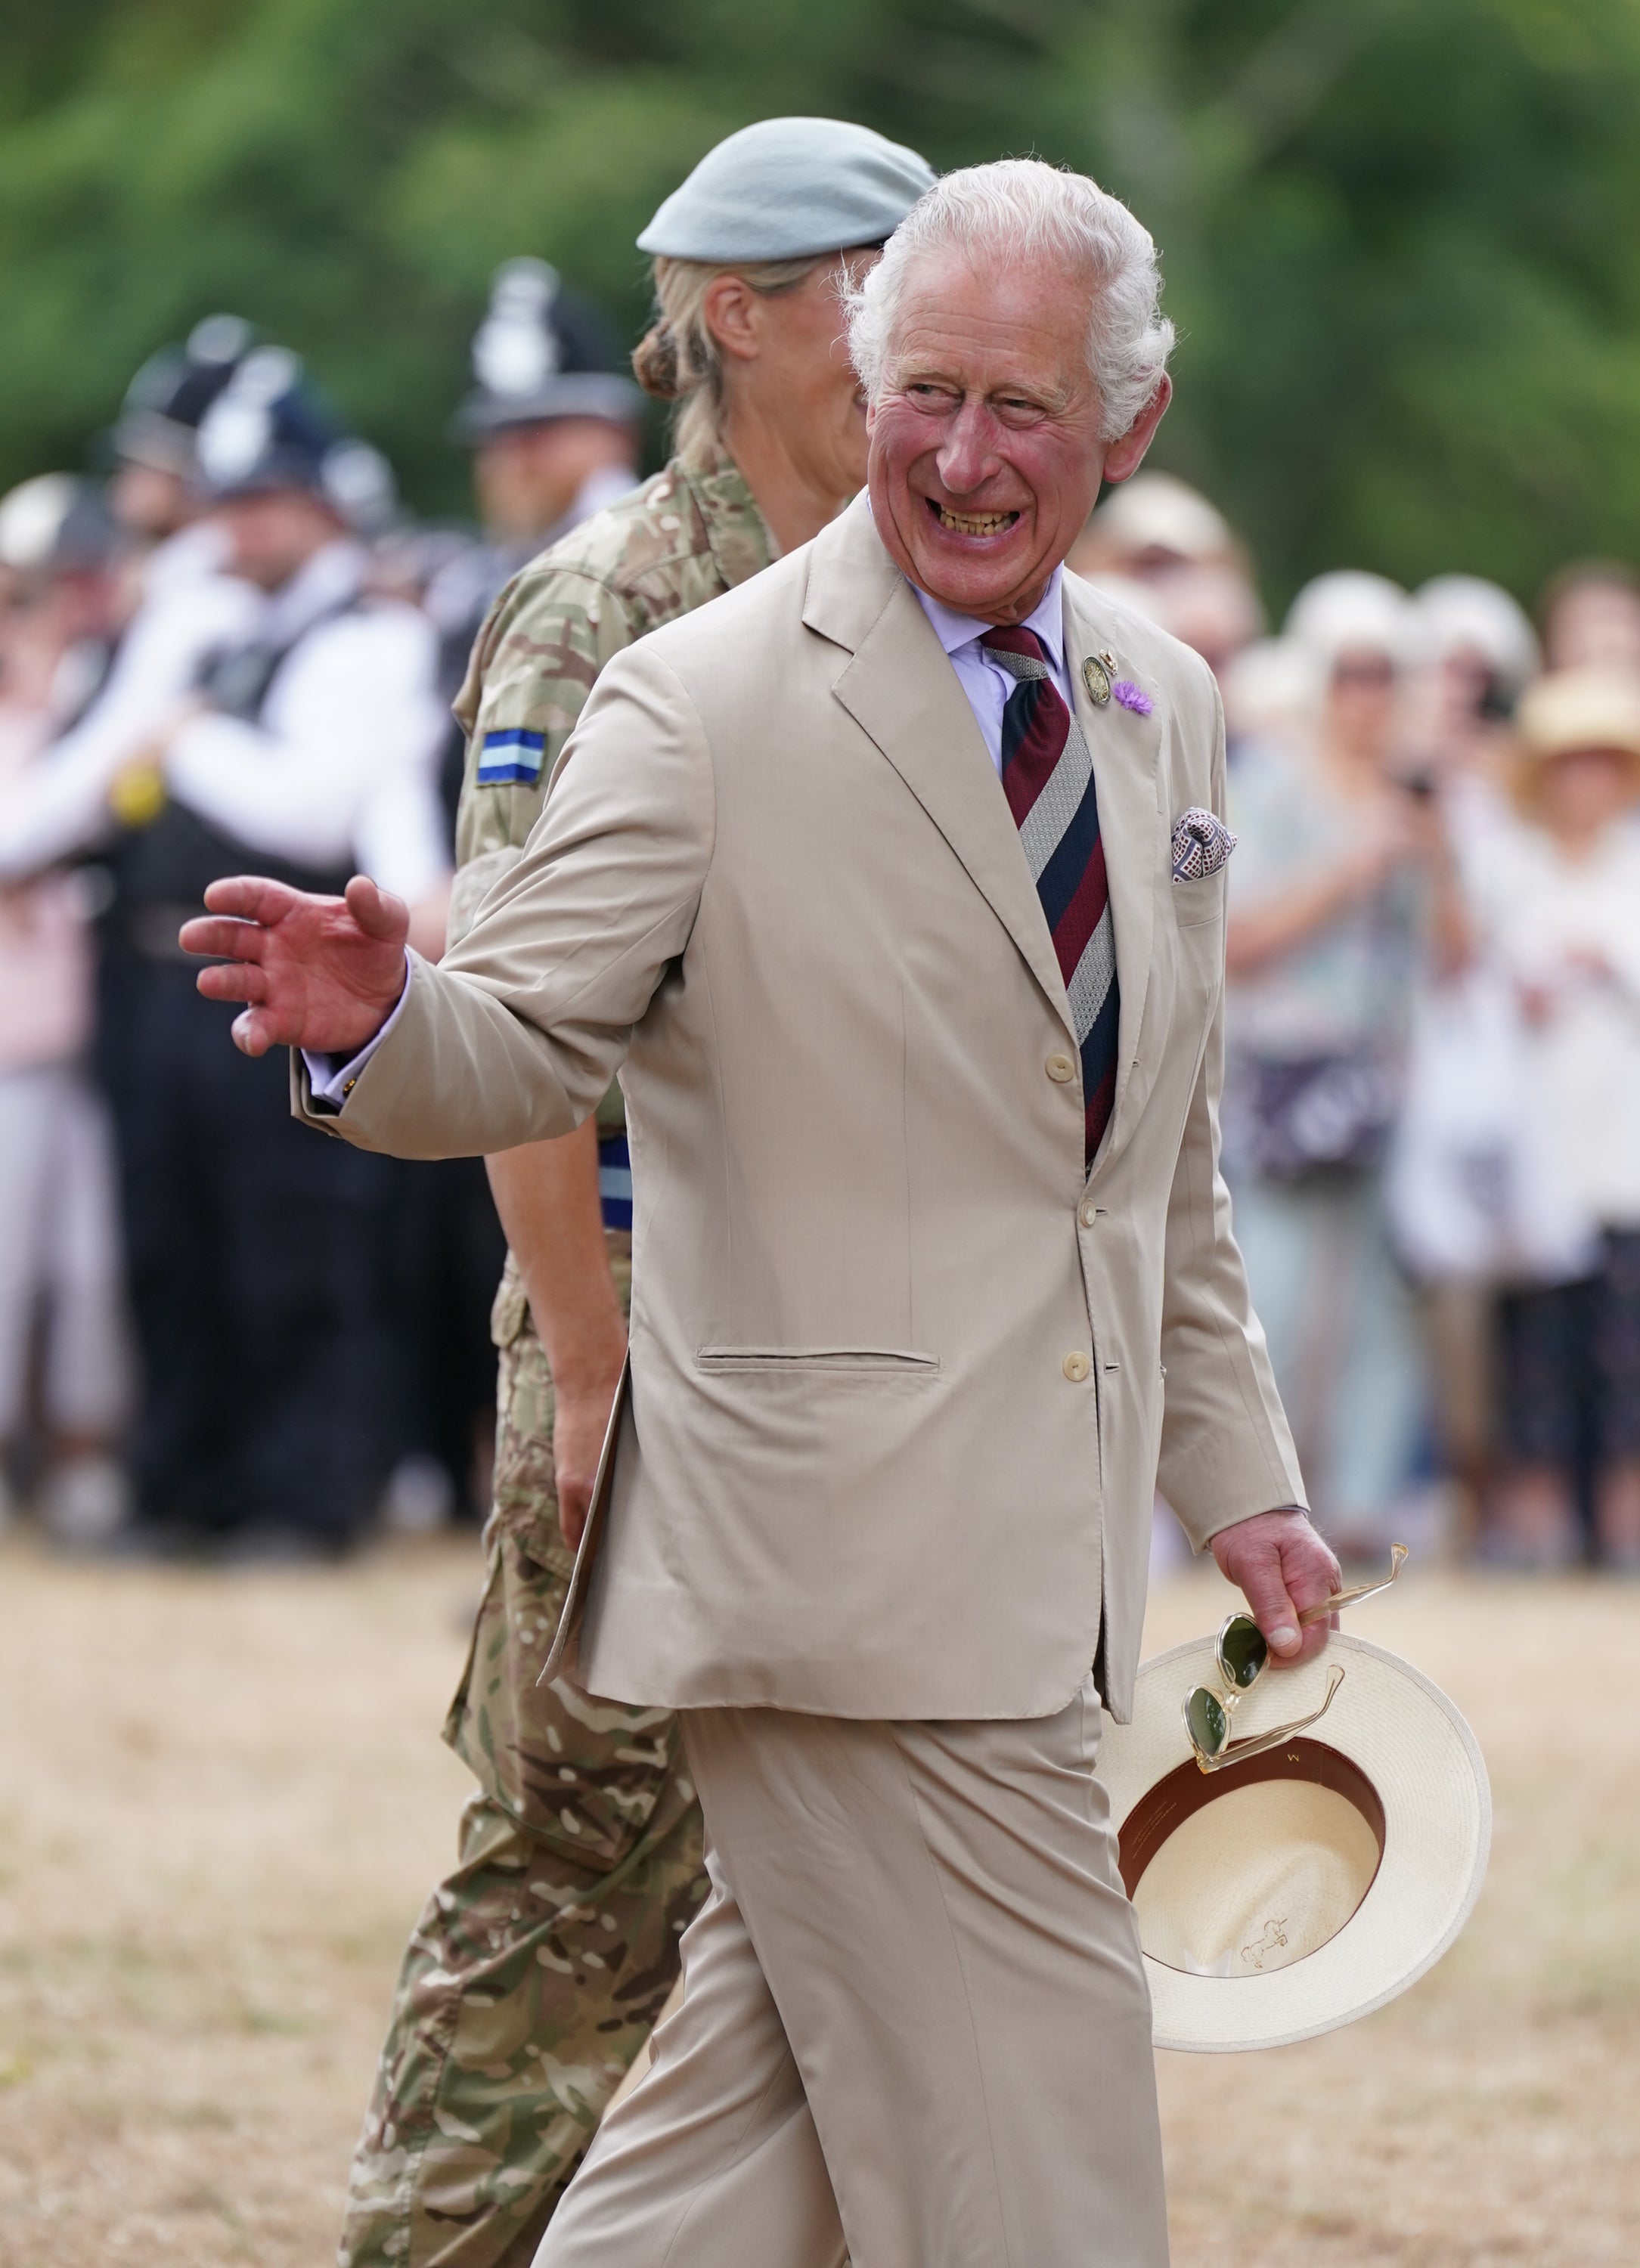 The Prince of Wales met members of the armed forces during his visit (Joe Giddens/PA)